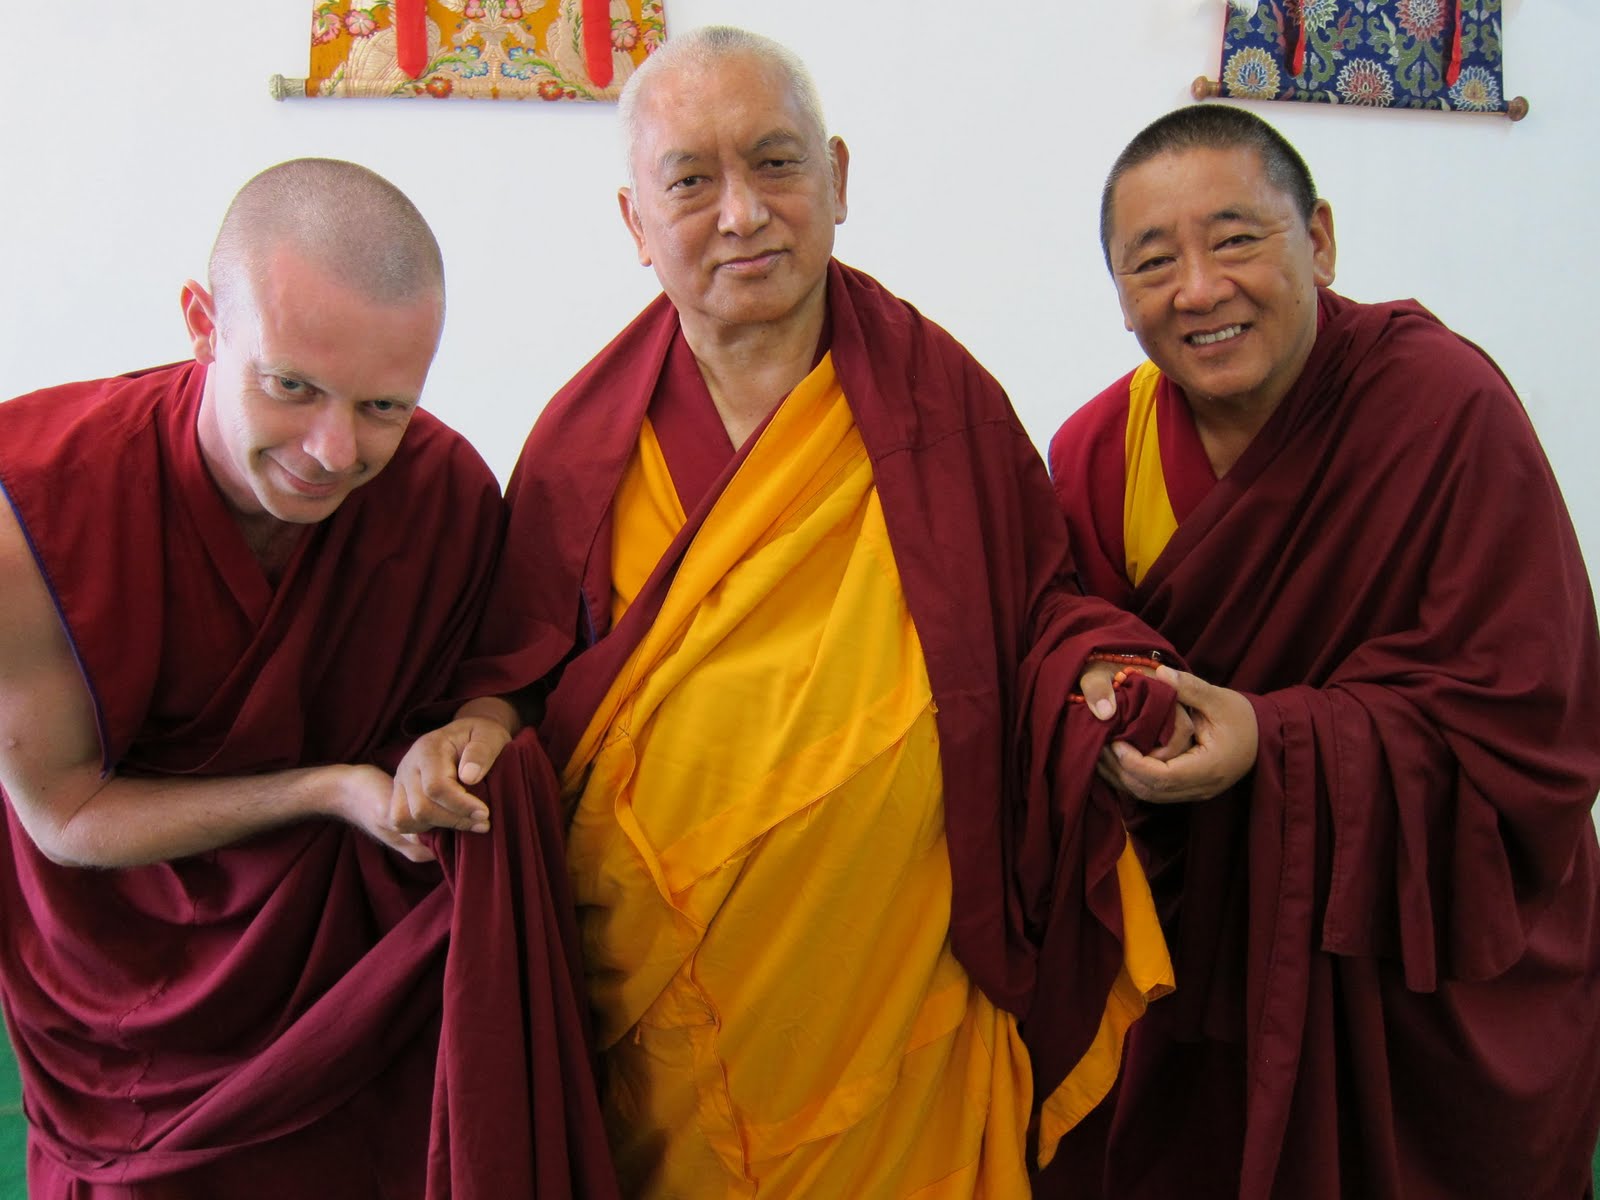 Lama Zopa Rinpoche with Geshe Wangdue and Venerable Tenzin Namdak at Sera Je Monastery, Bylakuppe, India, October 28, 2012. Photo by Ven. Roger Kunsang.